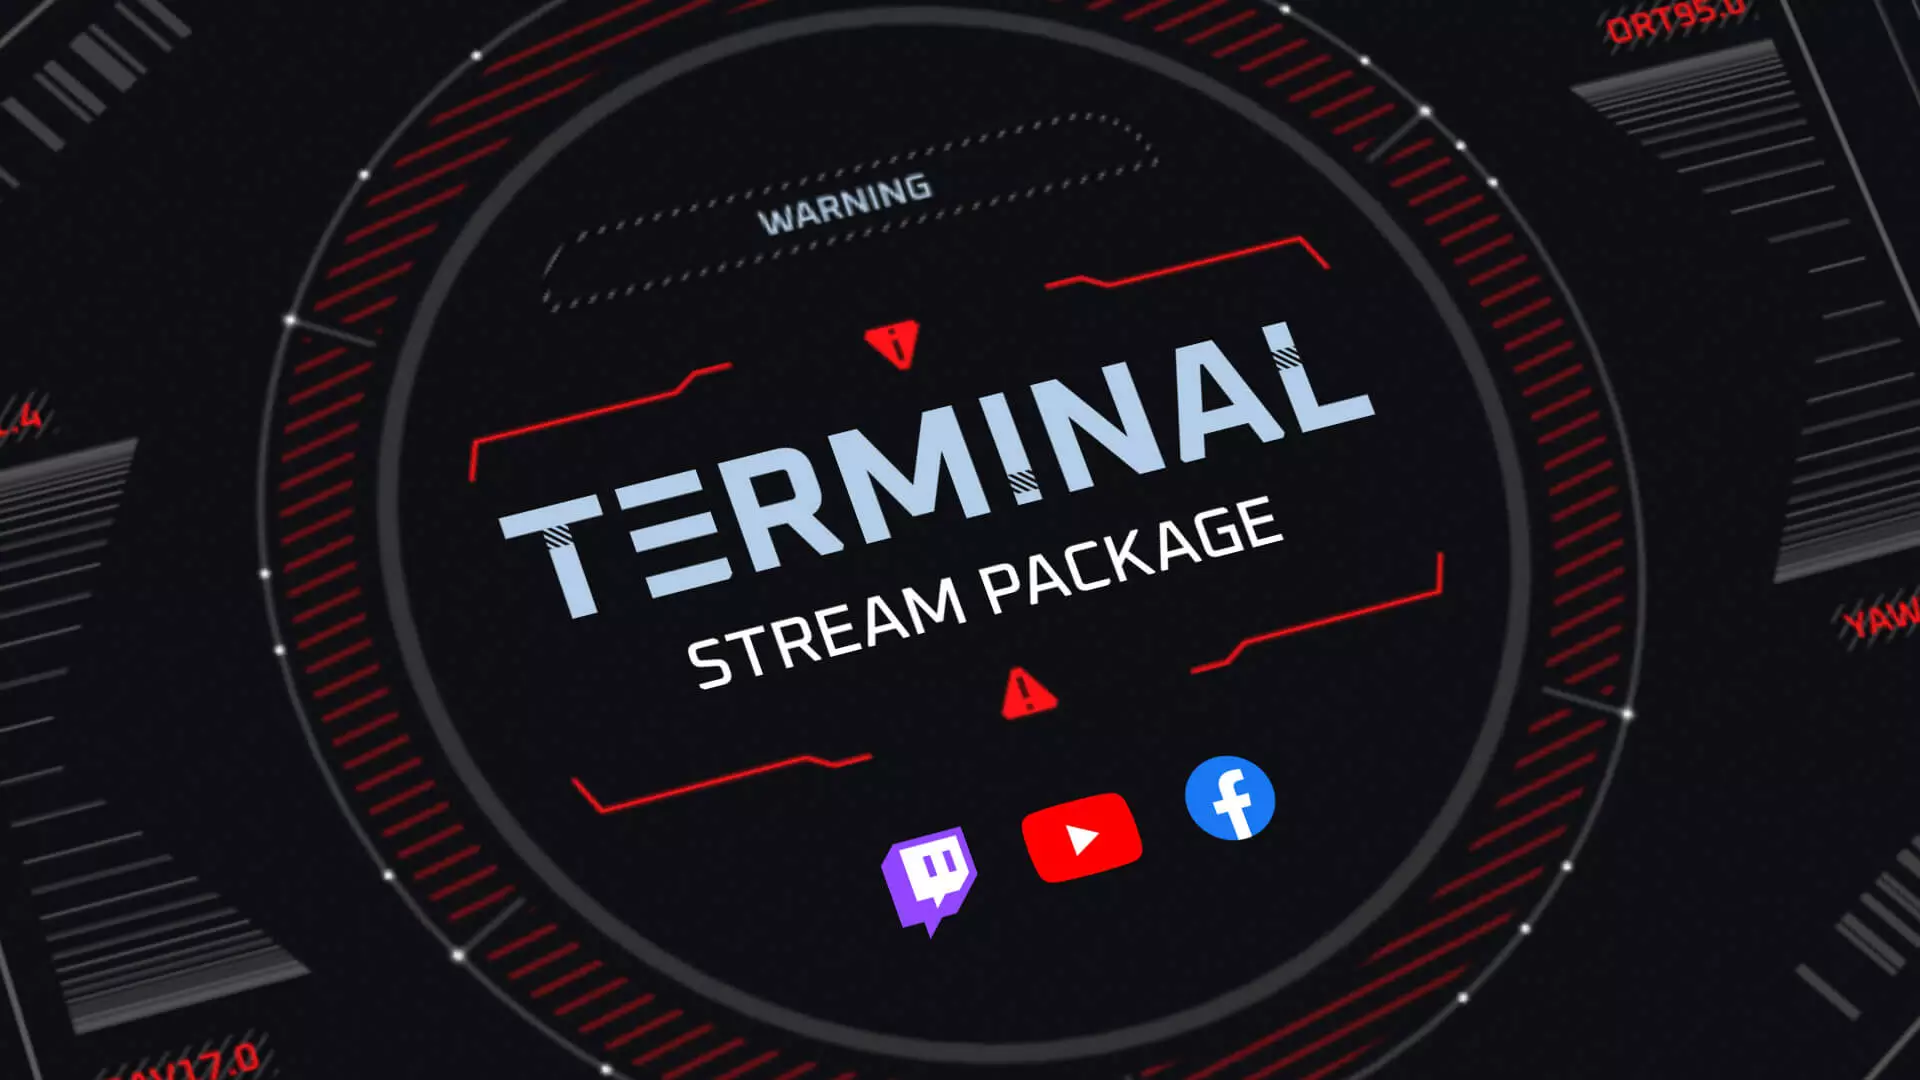 Terminal Stream Package